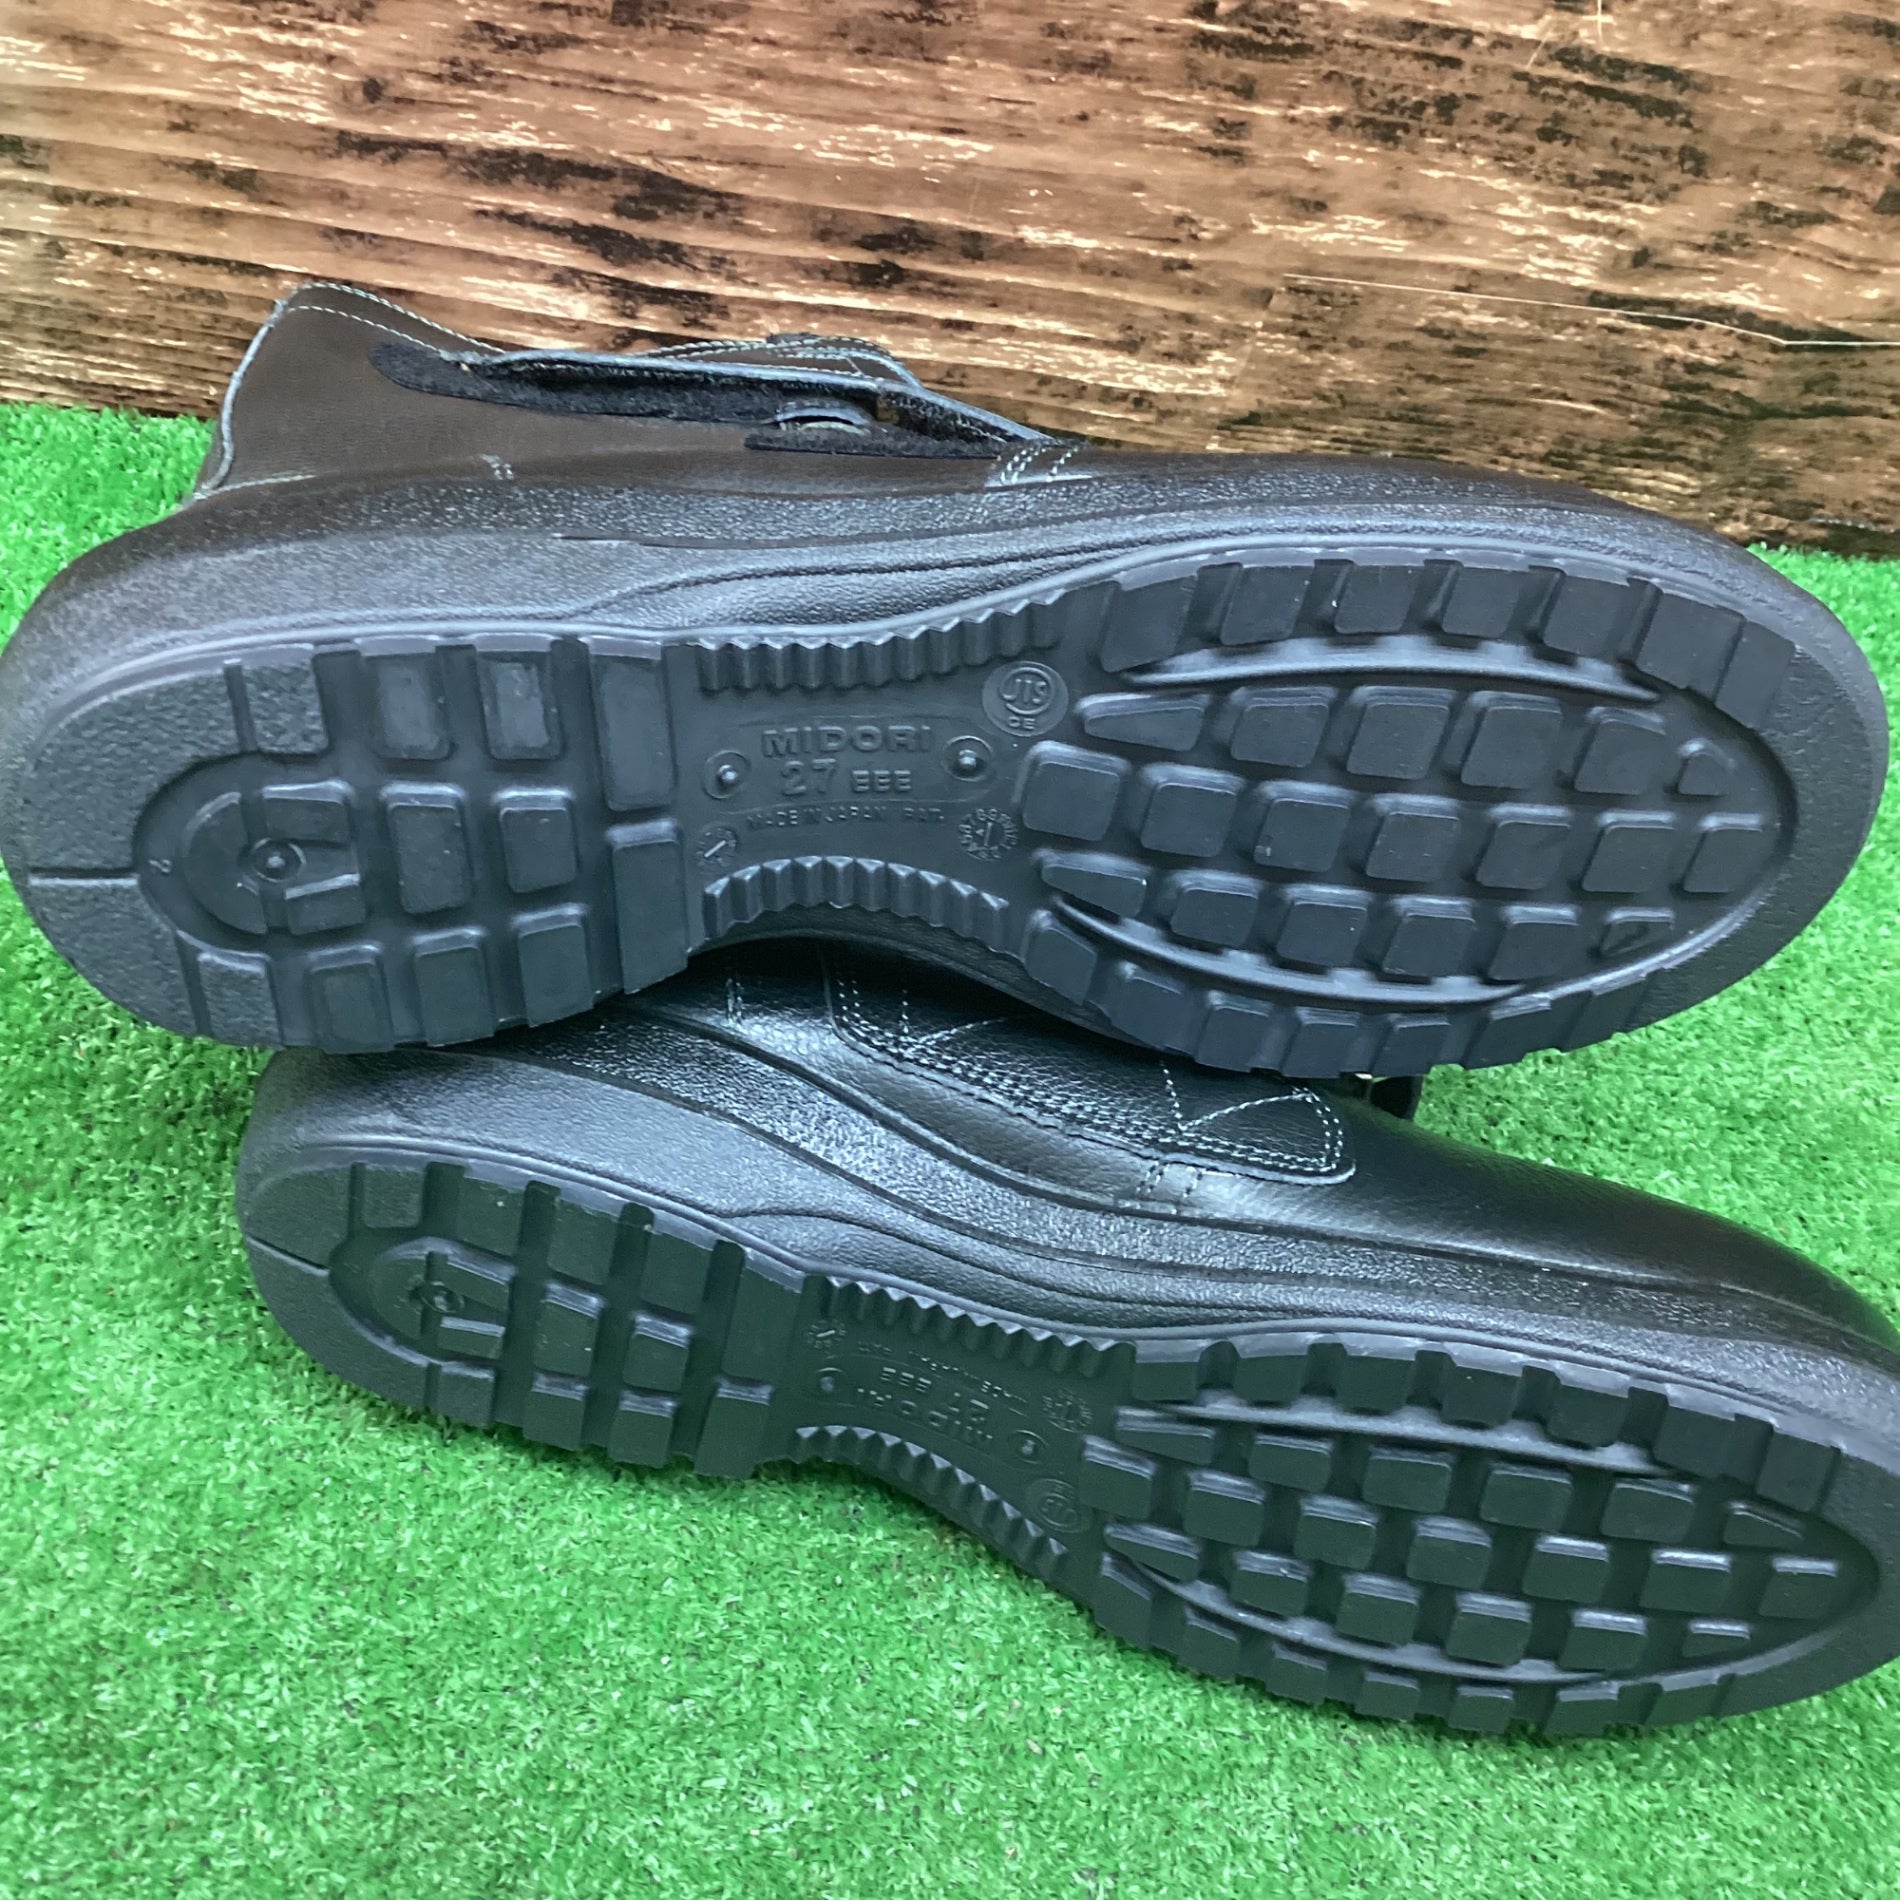 MIDORI ミドリ 安全靴 24.5cm ブラック HIGRIP.SOLE - 安全靴